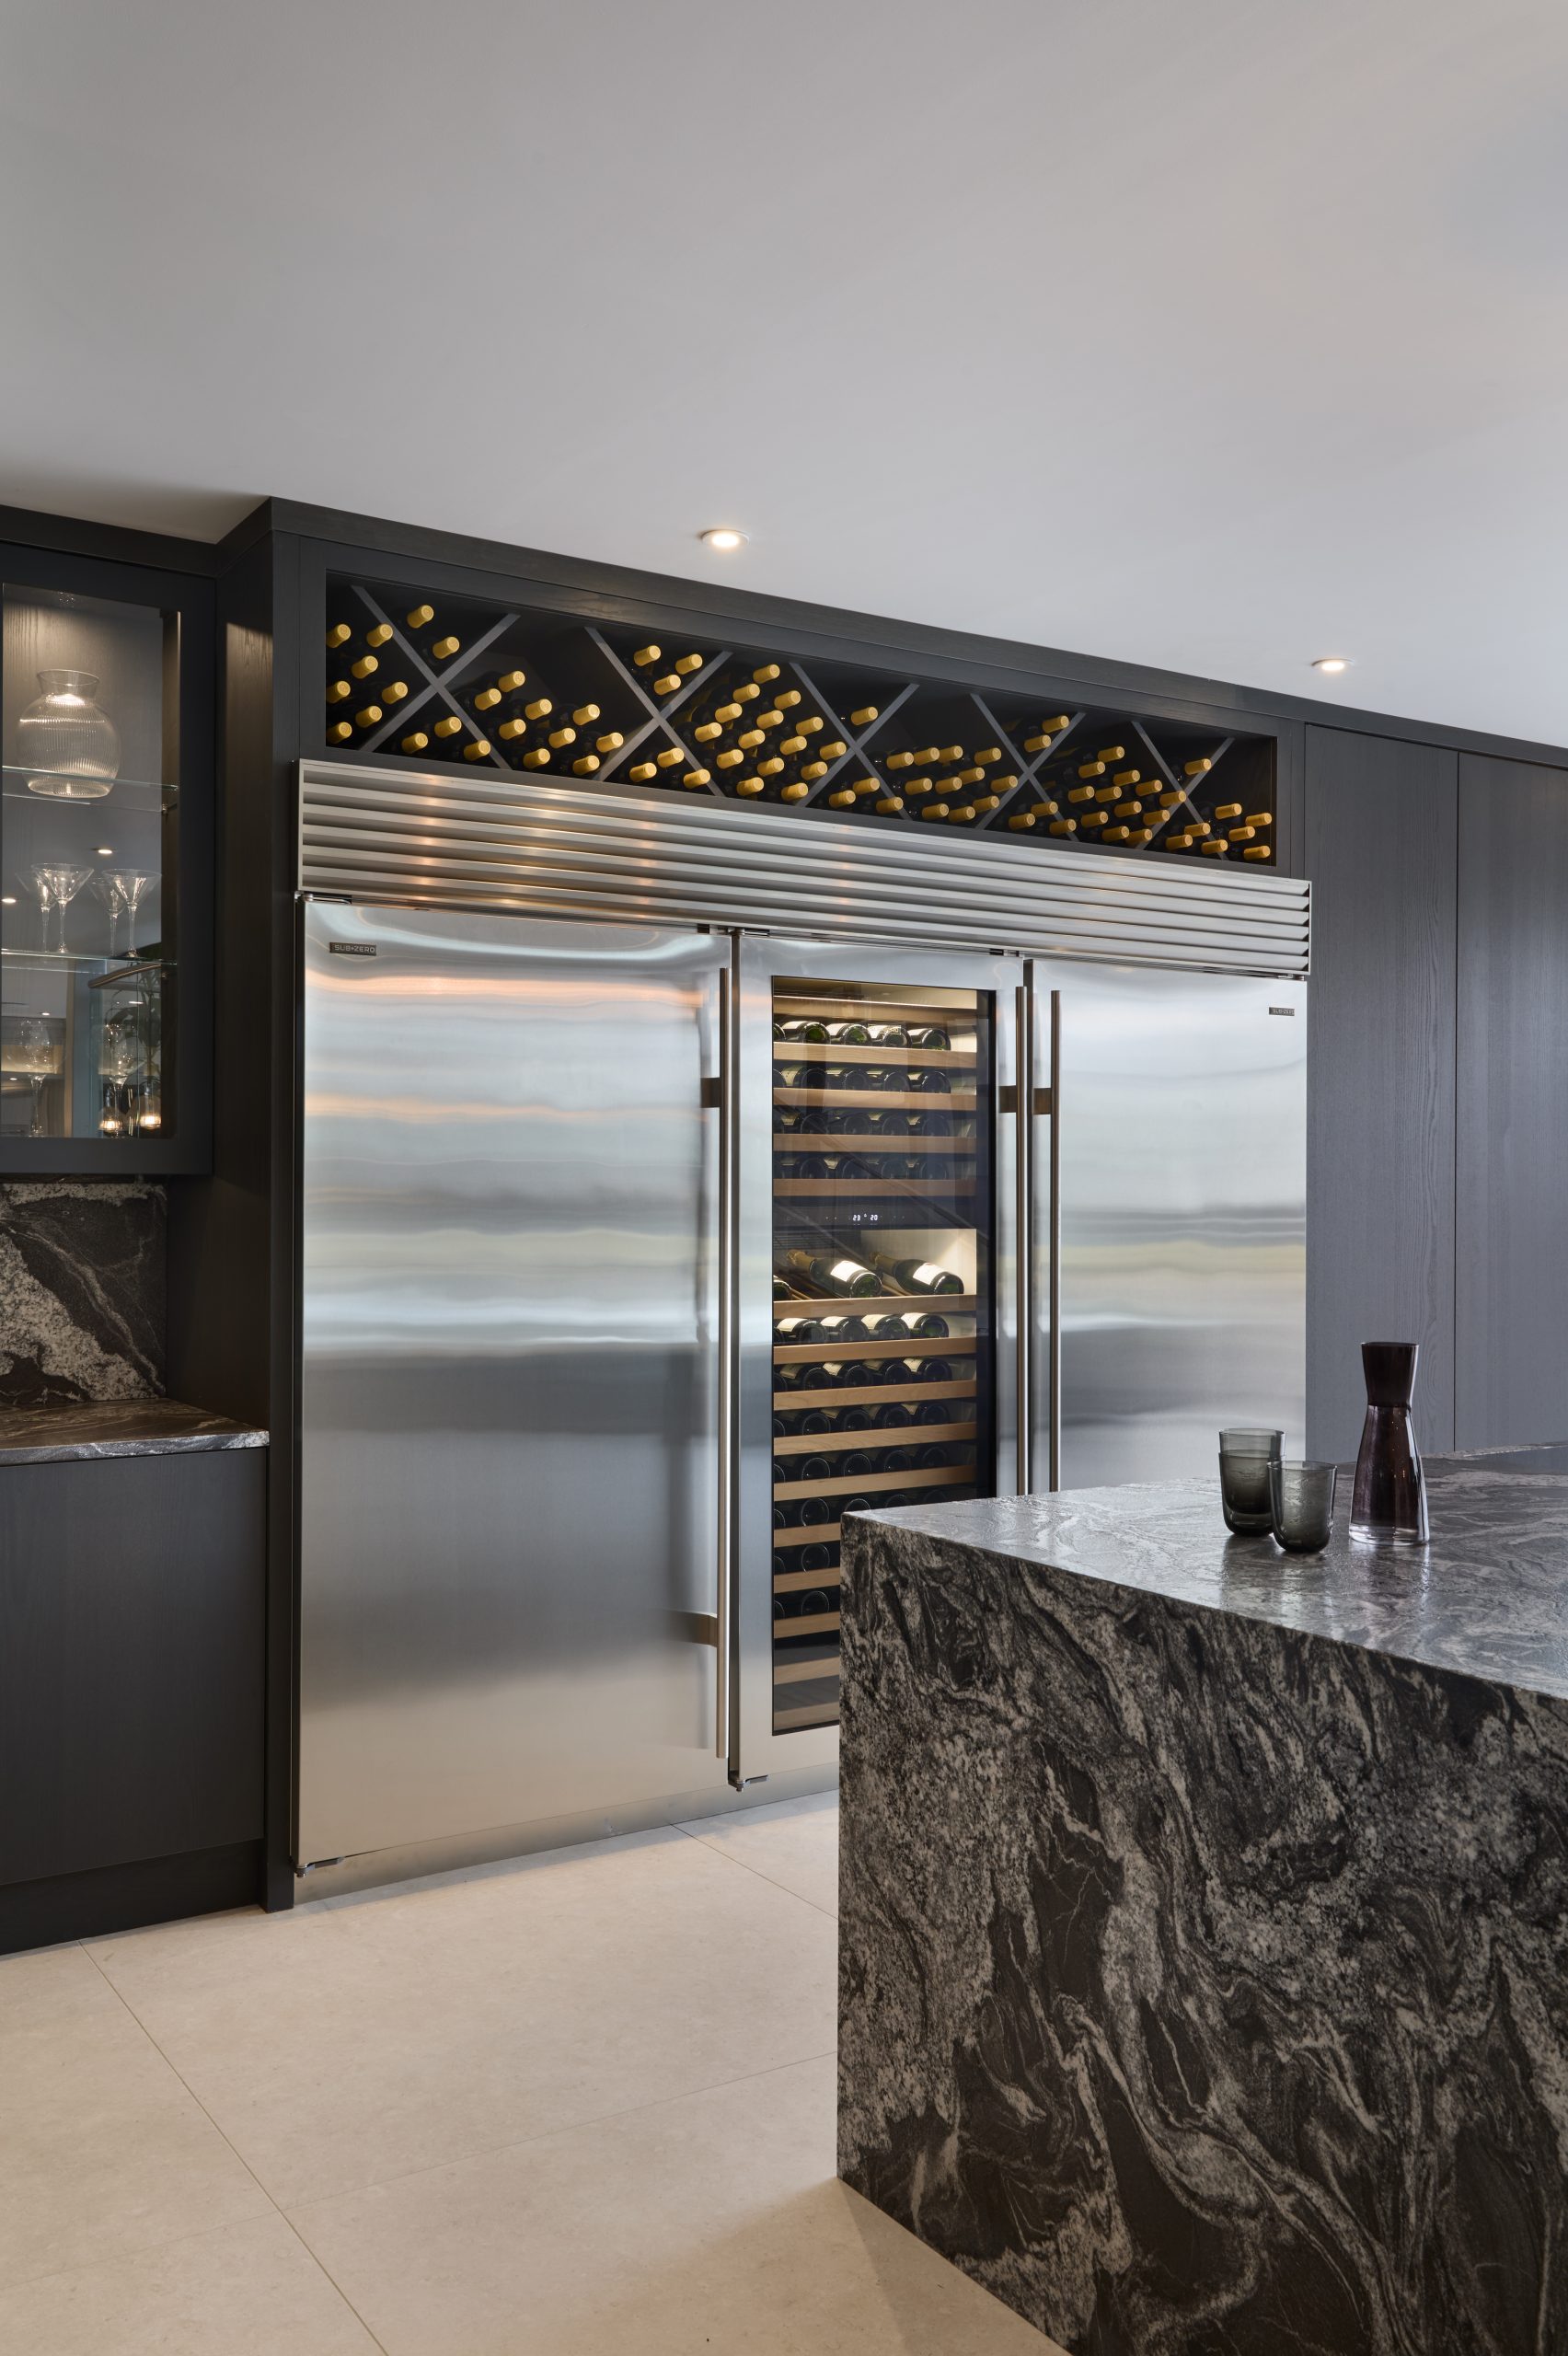 Stunning waterfall kitchen island and Sub-Zero wine unit and refrigeration, criss coss wine storage above the wine unit.  